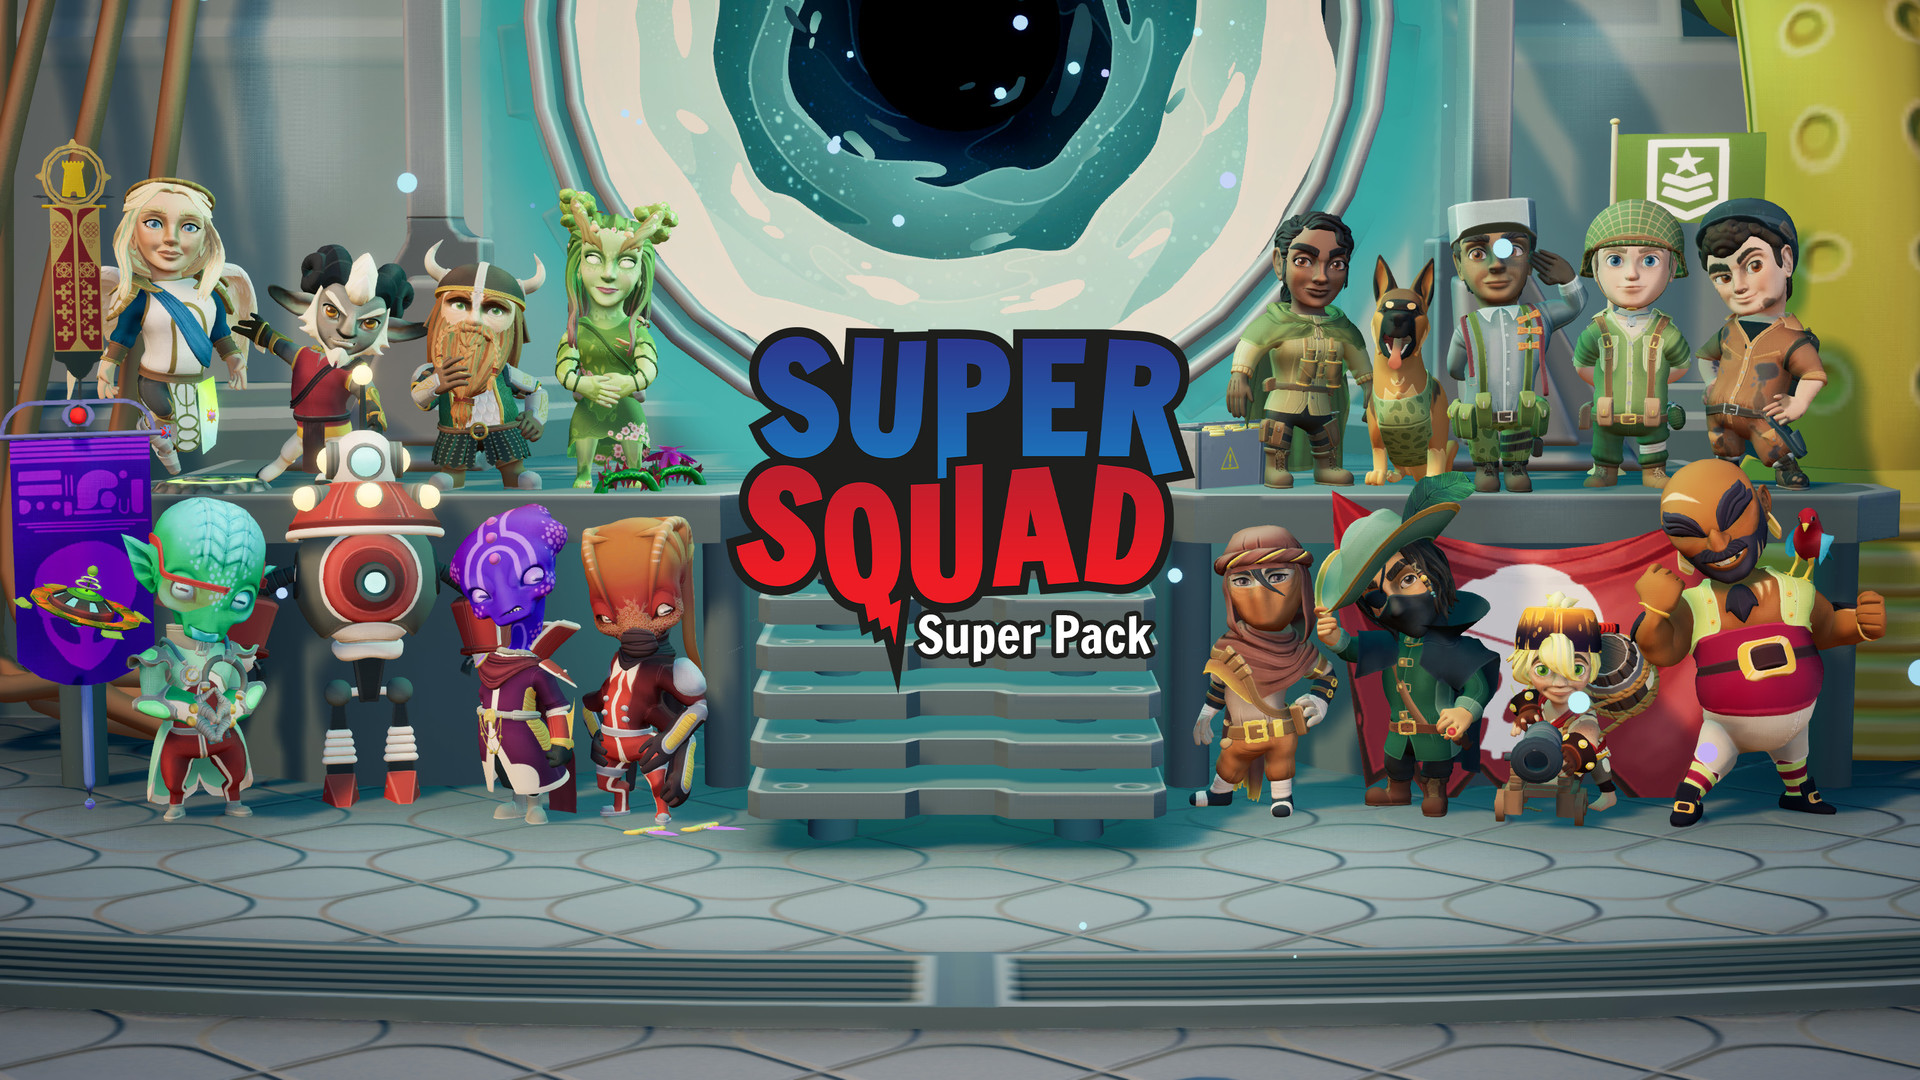 Super Squad - Super Pack DLC Steam CD Key, 22.59 usd